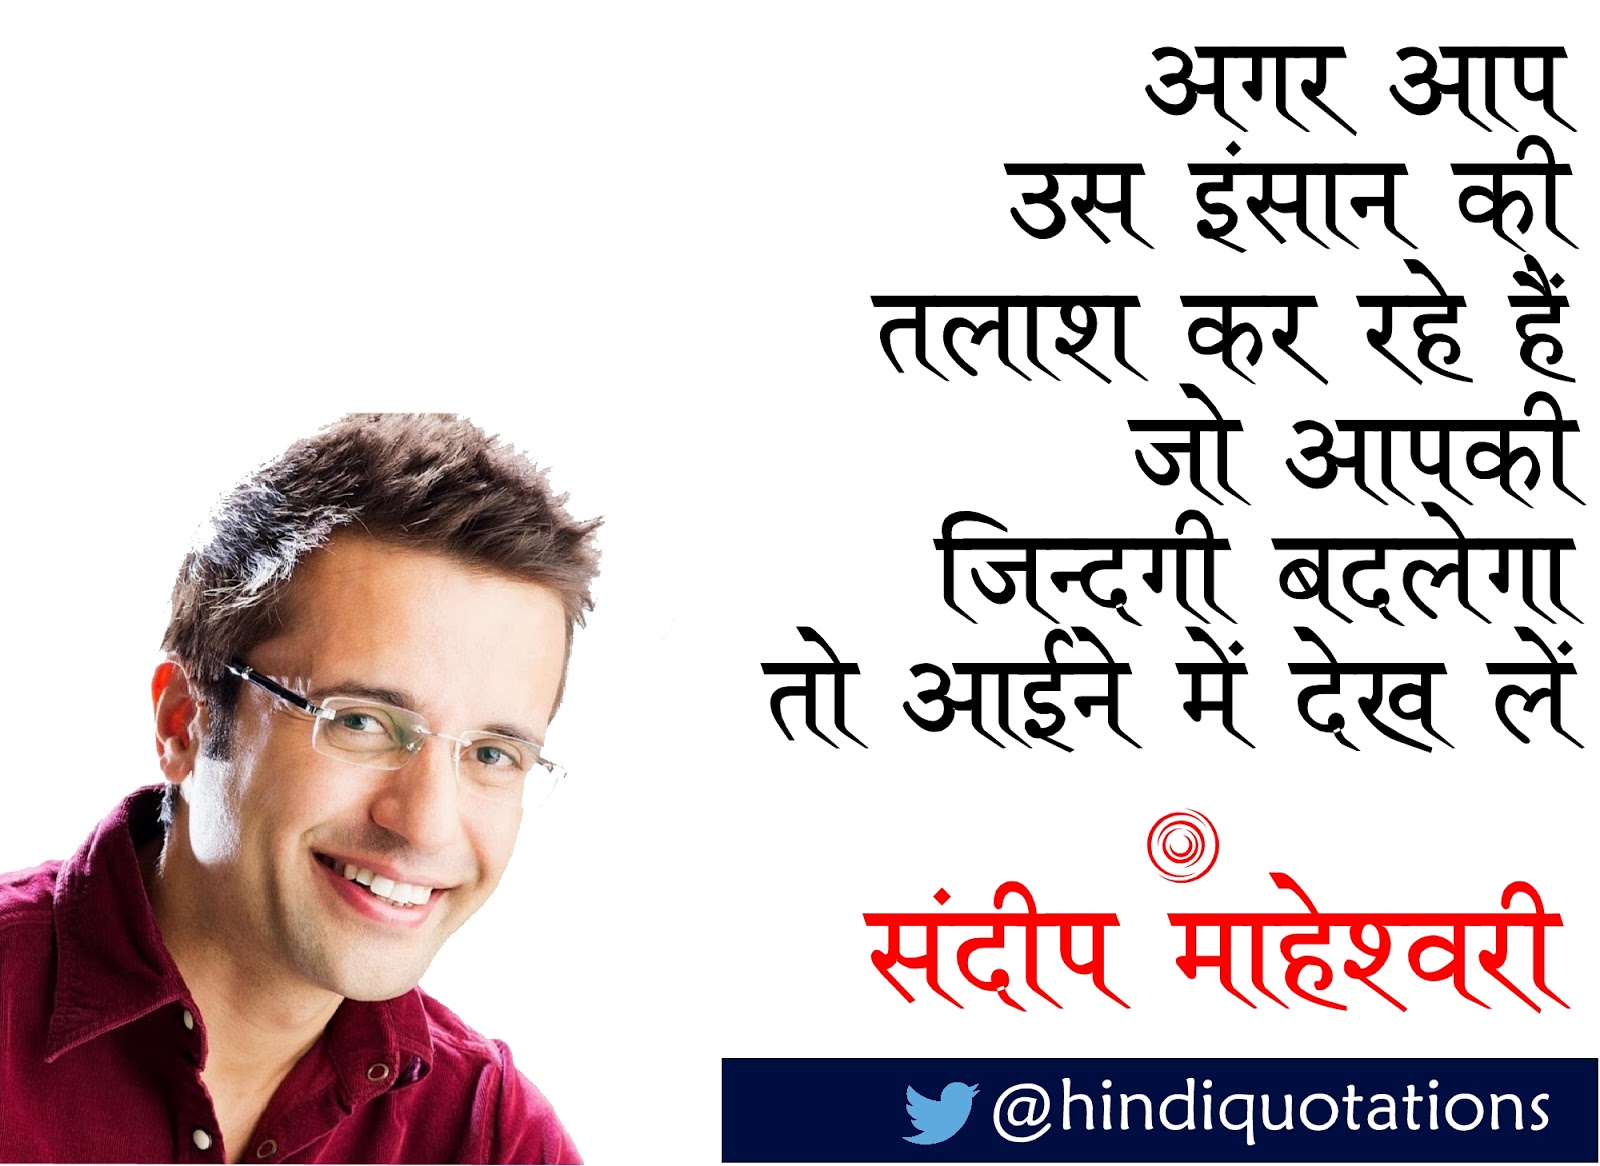 Hindi Motivational Quotes: Hindi Motivational Quotes - हिन्दी सुविचार